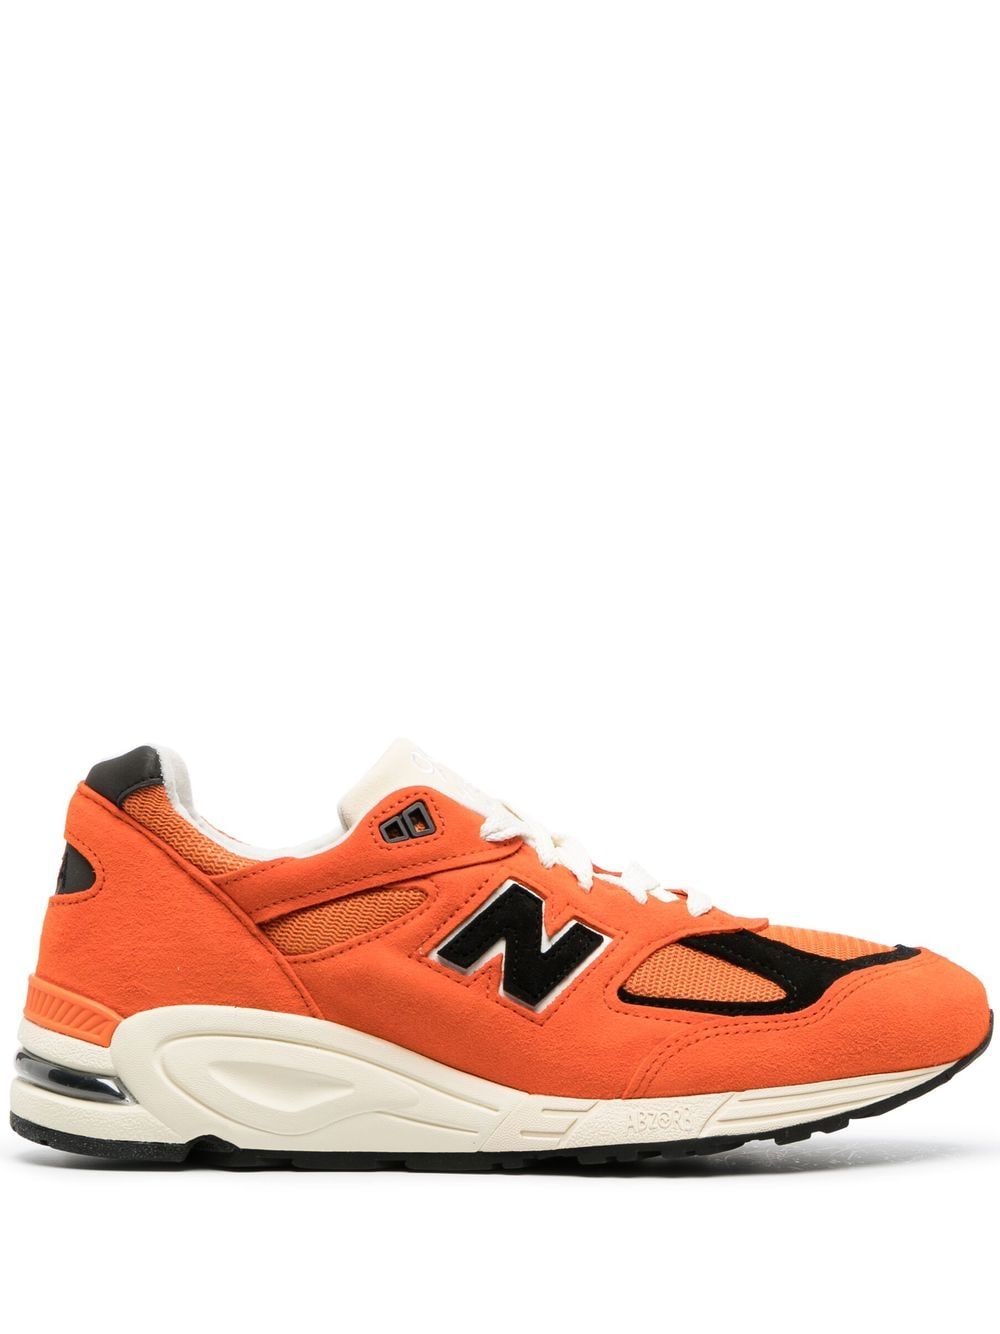 New Balance Made in USA trainers - Orange